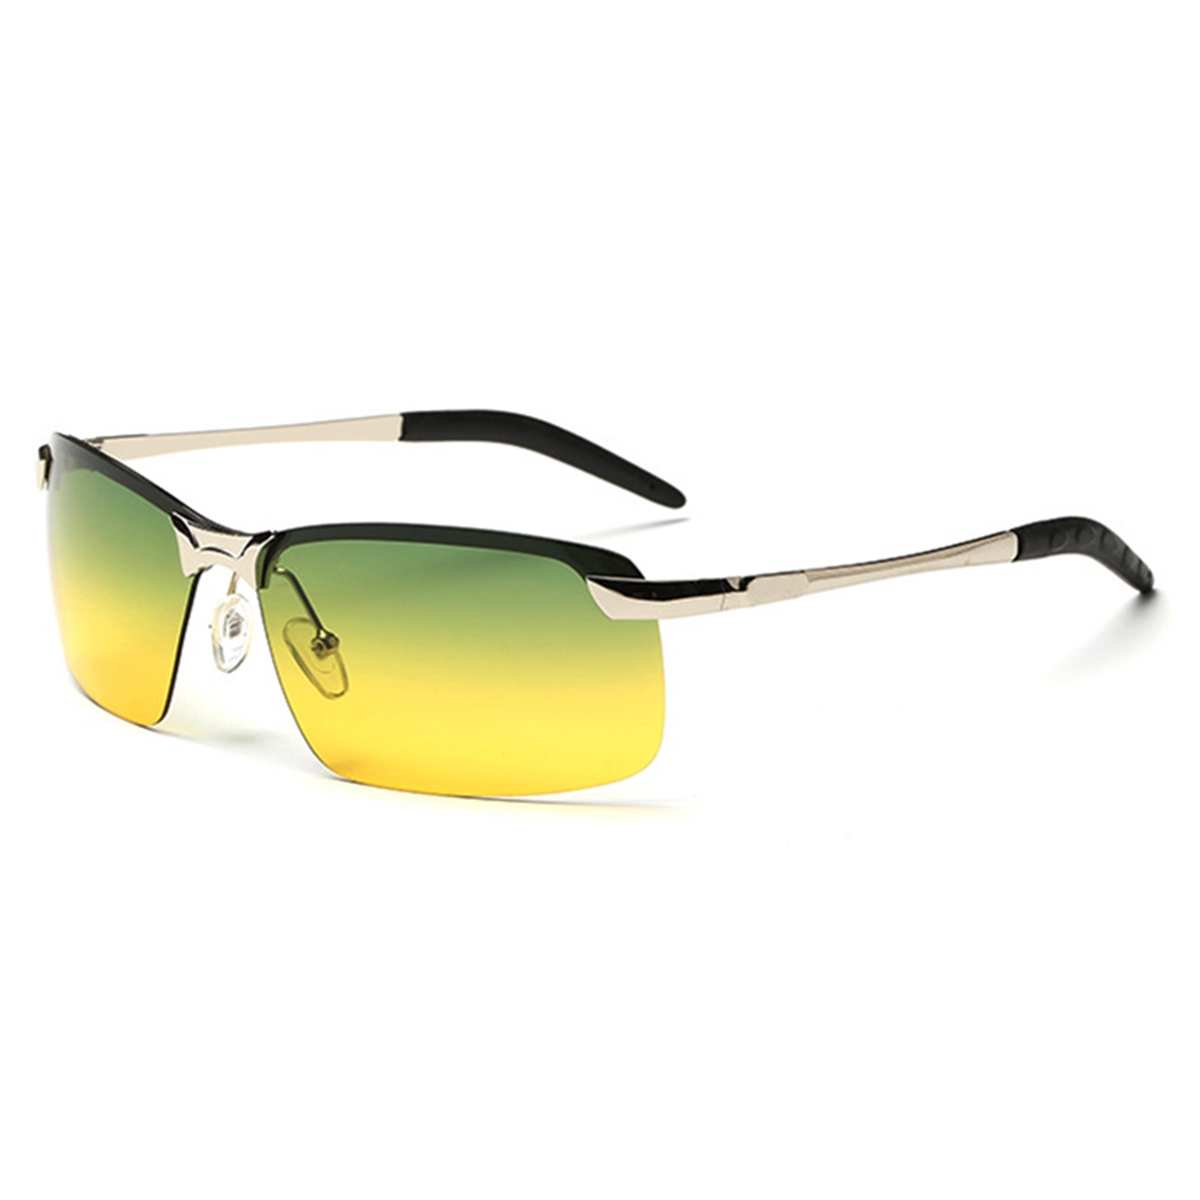 Fashion-Day-Night-Vision-Polarized-Sunglasses-Driving-Glasses-Eyewear-UV400-1317966